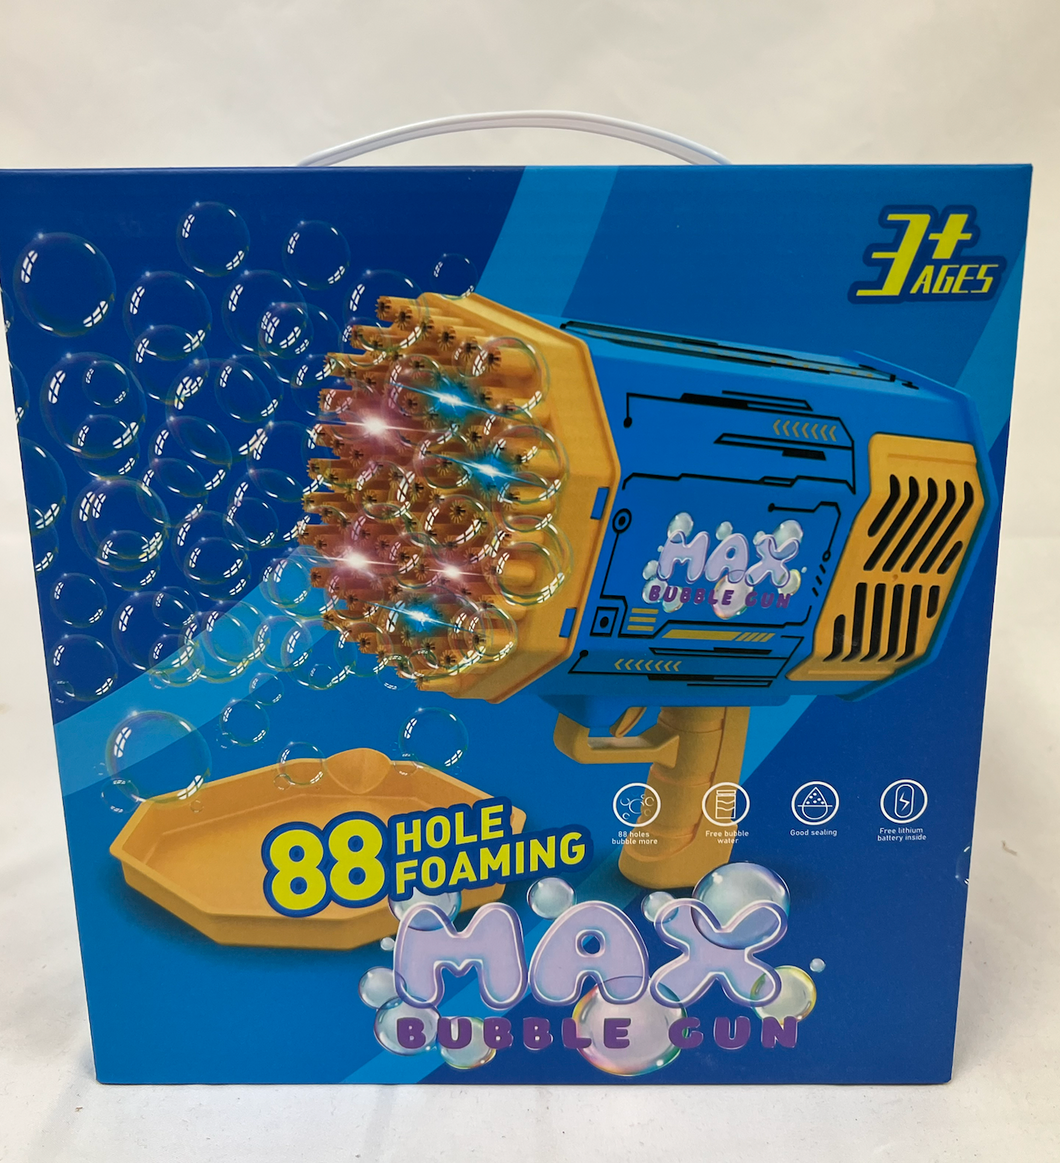 Lot of 16 (88 hole) Foaming Max Bubble Guns PINK